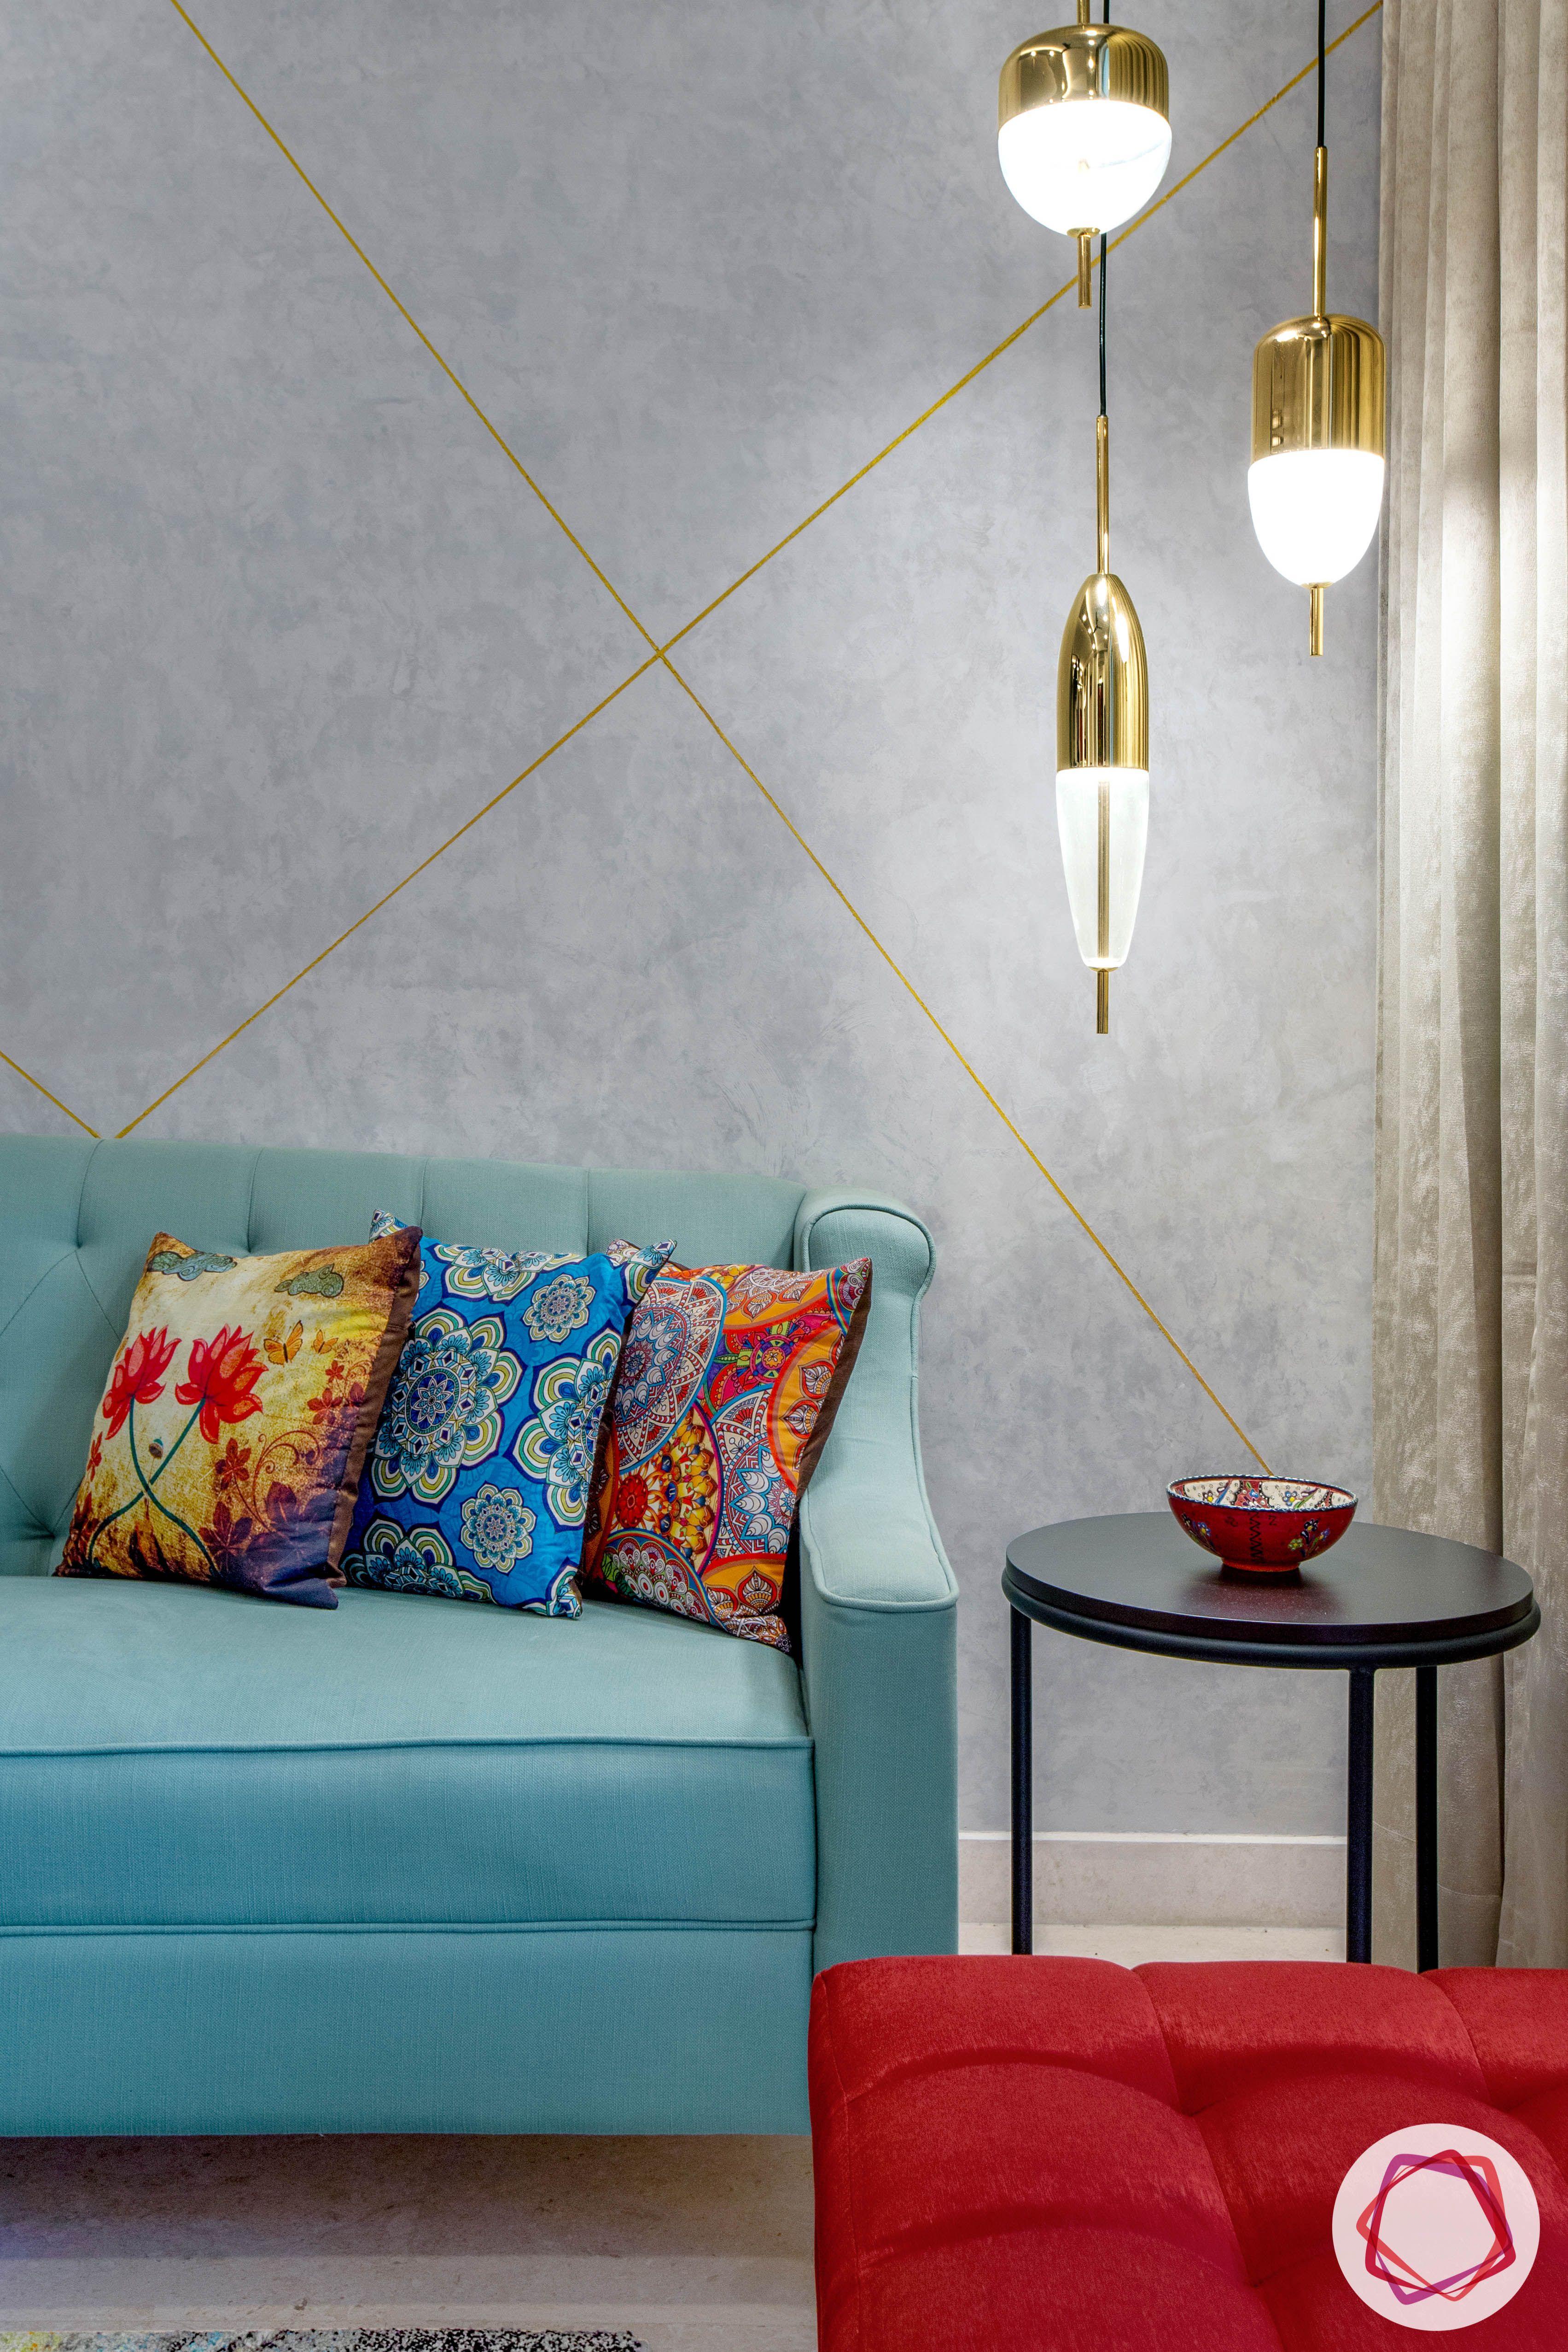 corner light-pendant lights-red and blue sofa designs